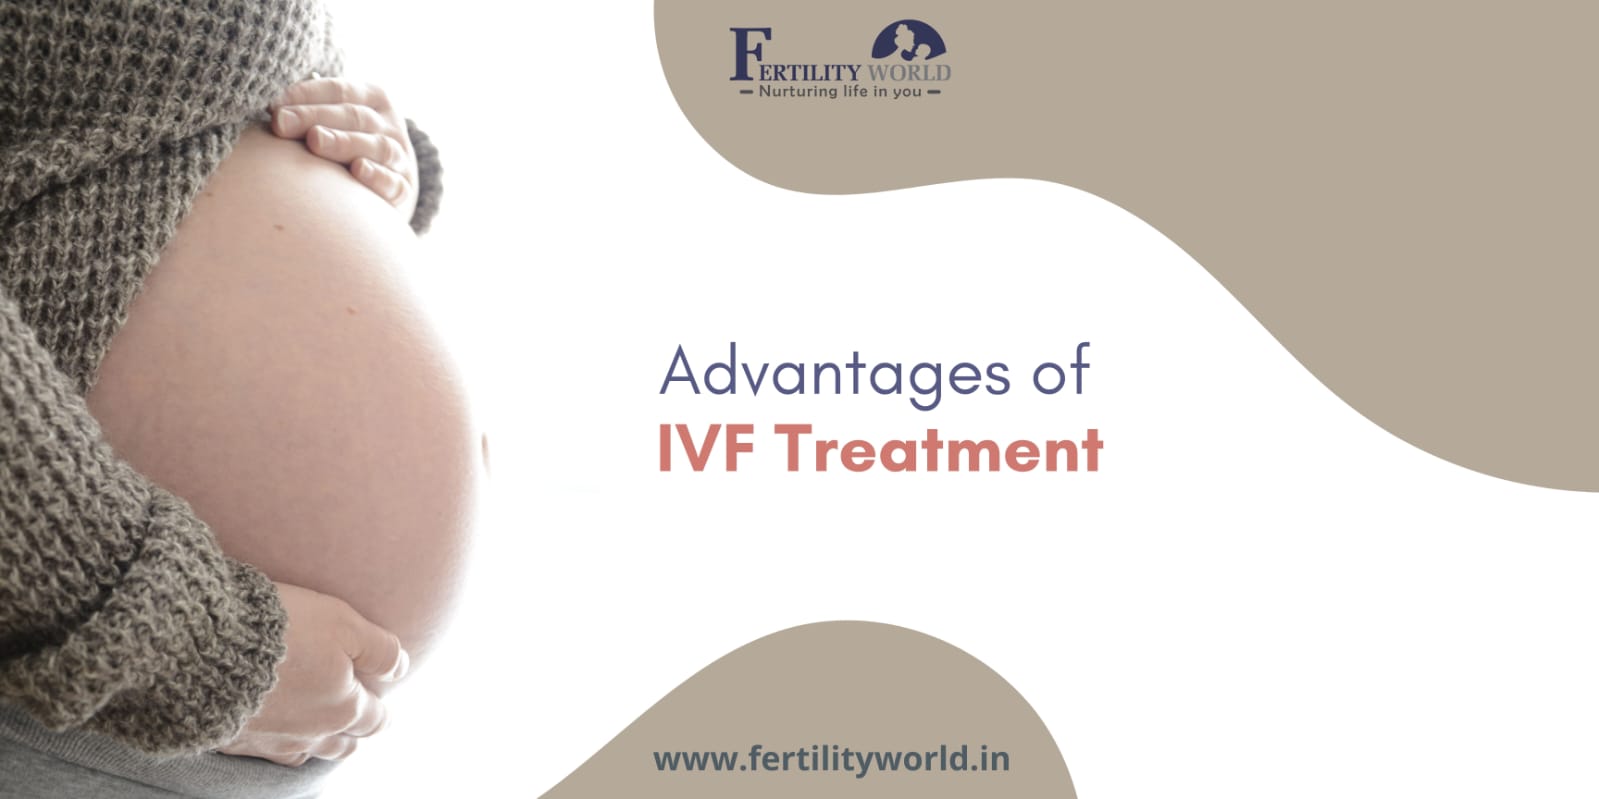 Advantages of IVF treatments